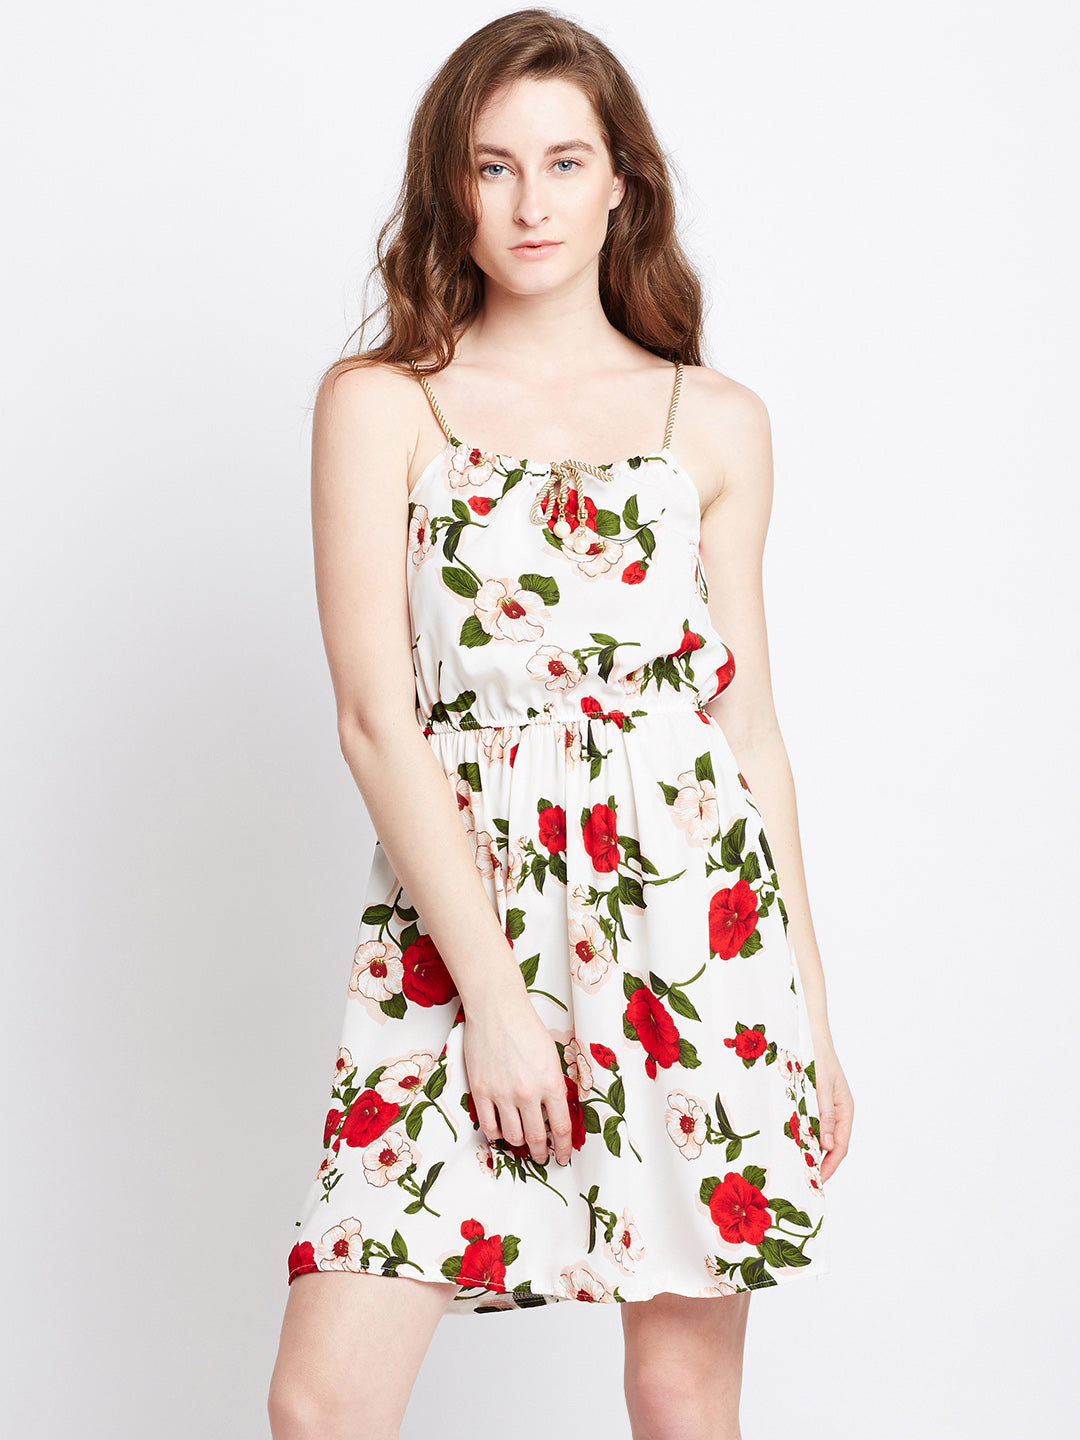 Berrylush Women White & Red Floral Printed Square Neck Drawstring Fit & Flare Mini Dress